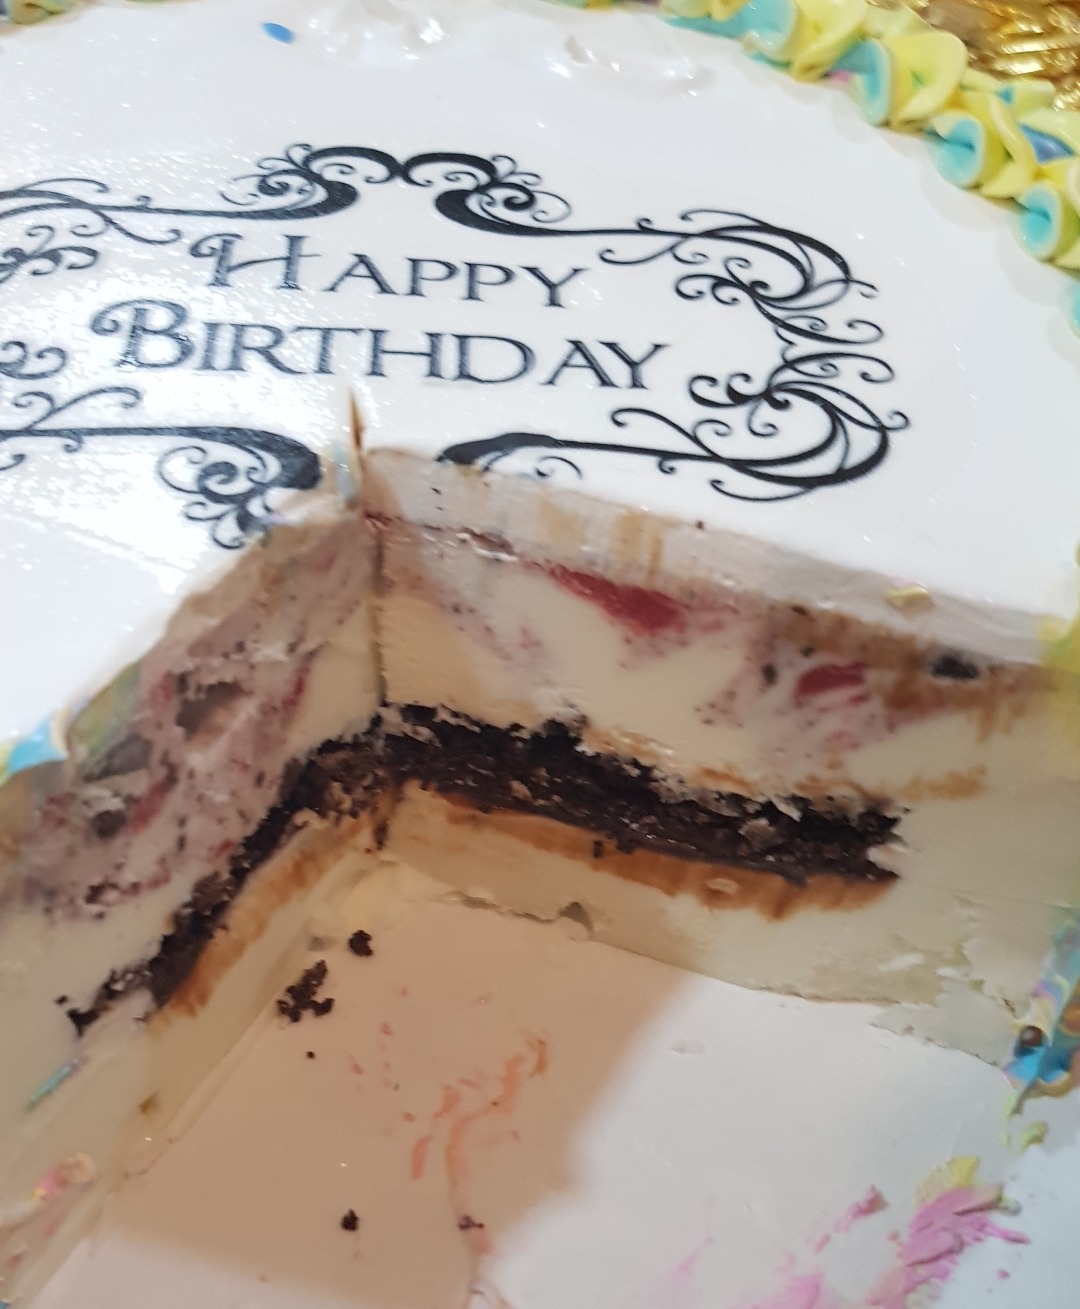 Oreo & strawberry 
#birthday_cake #icecream @ Dairy Queen (DQ) - Bahrain